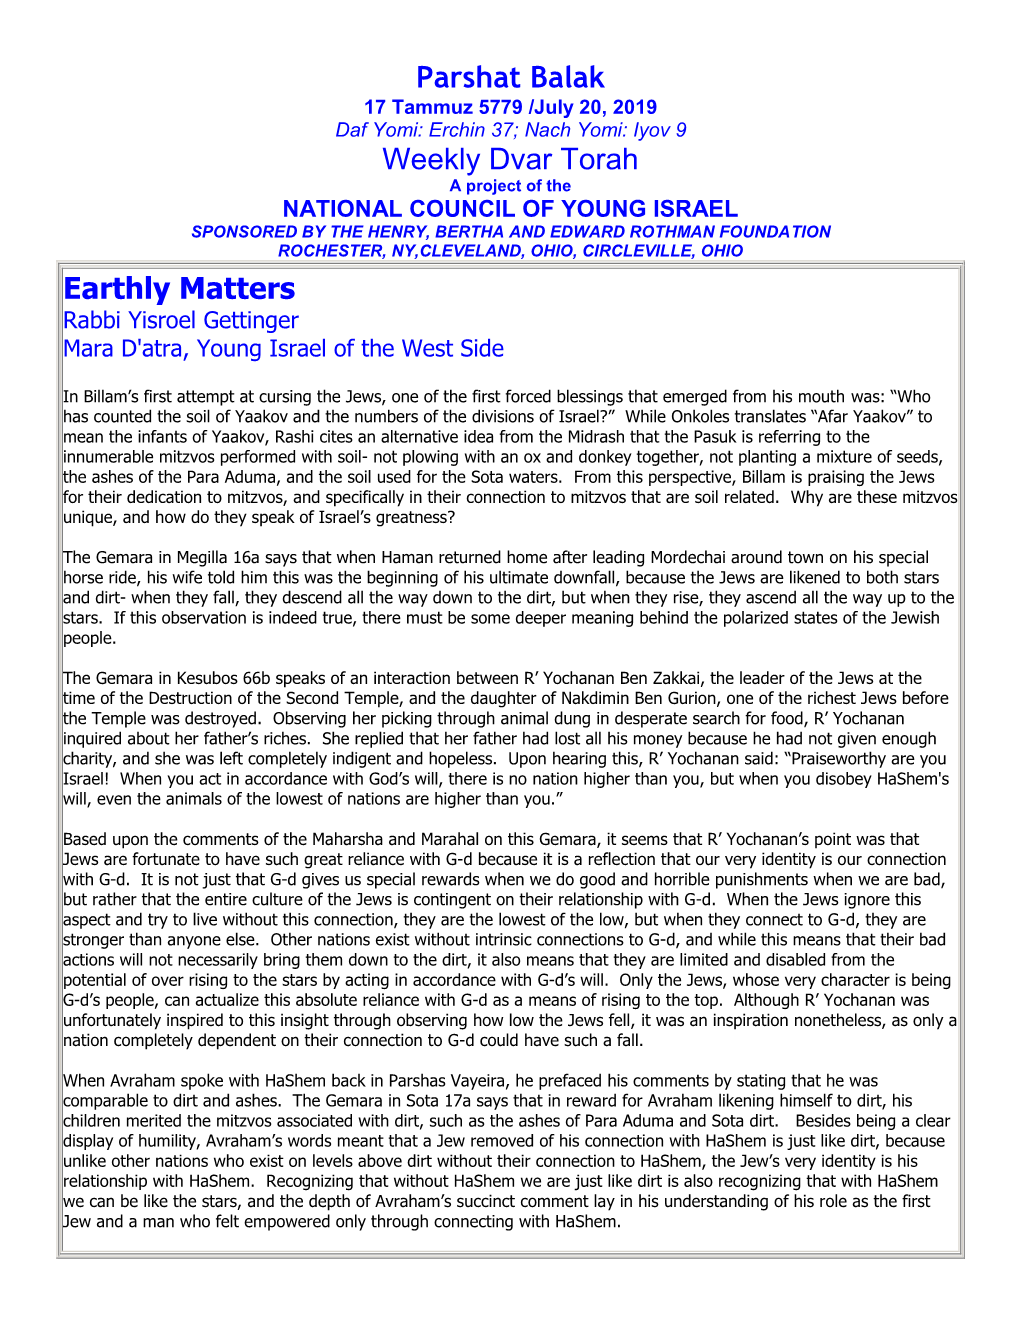 Parshat Balak Weekly Dvar Torah Earthly Matters